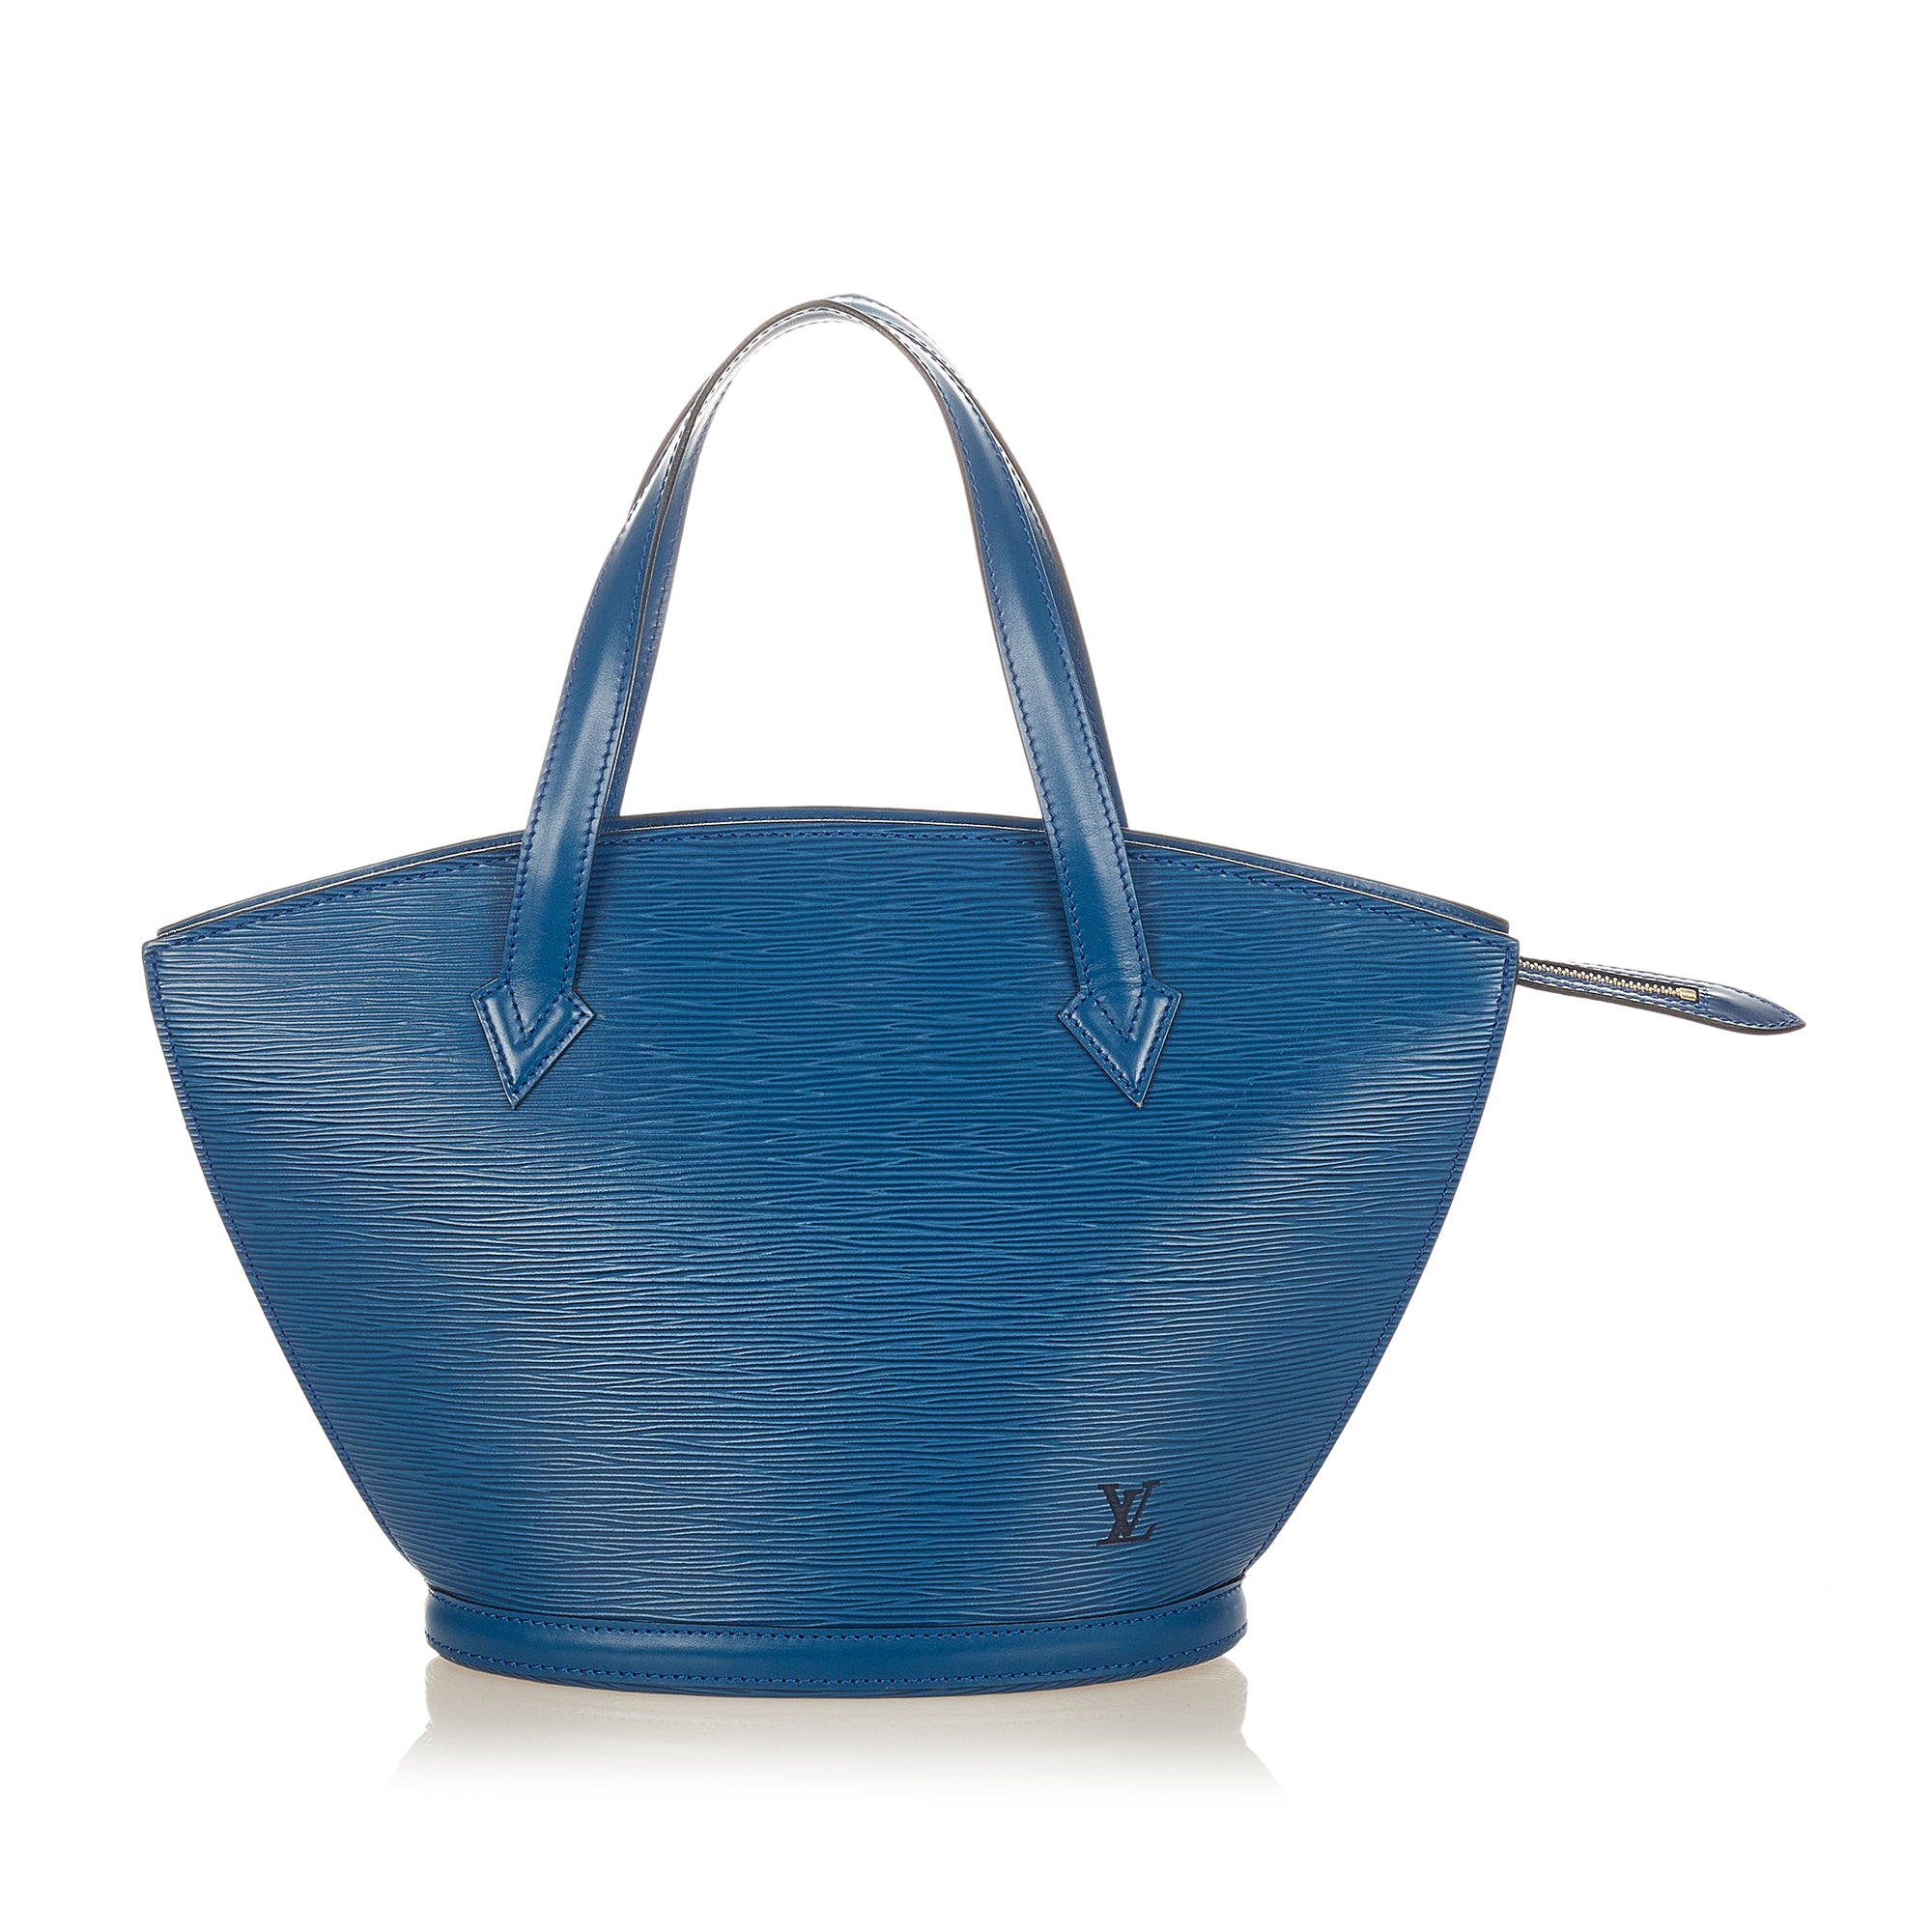 louis vuitton saint jacques small model shopping bag in blue epi leather